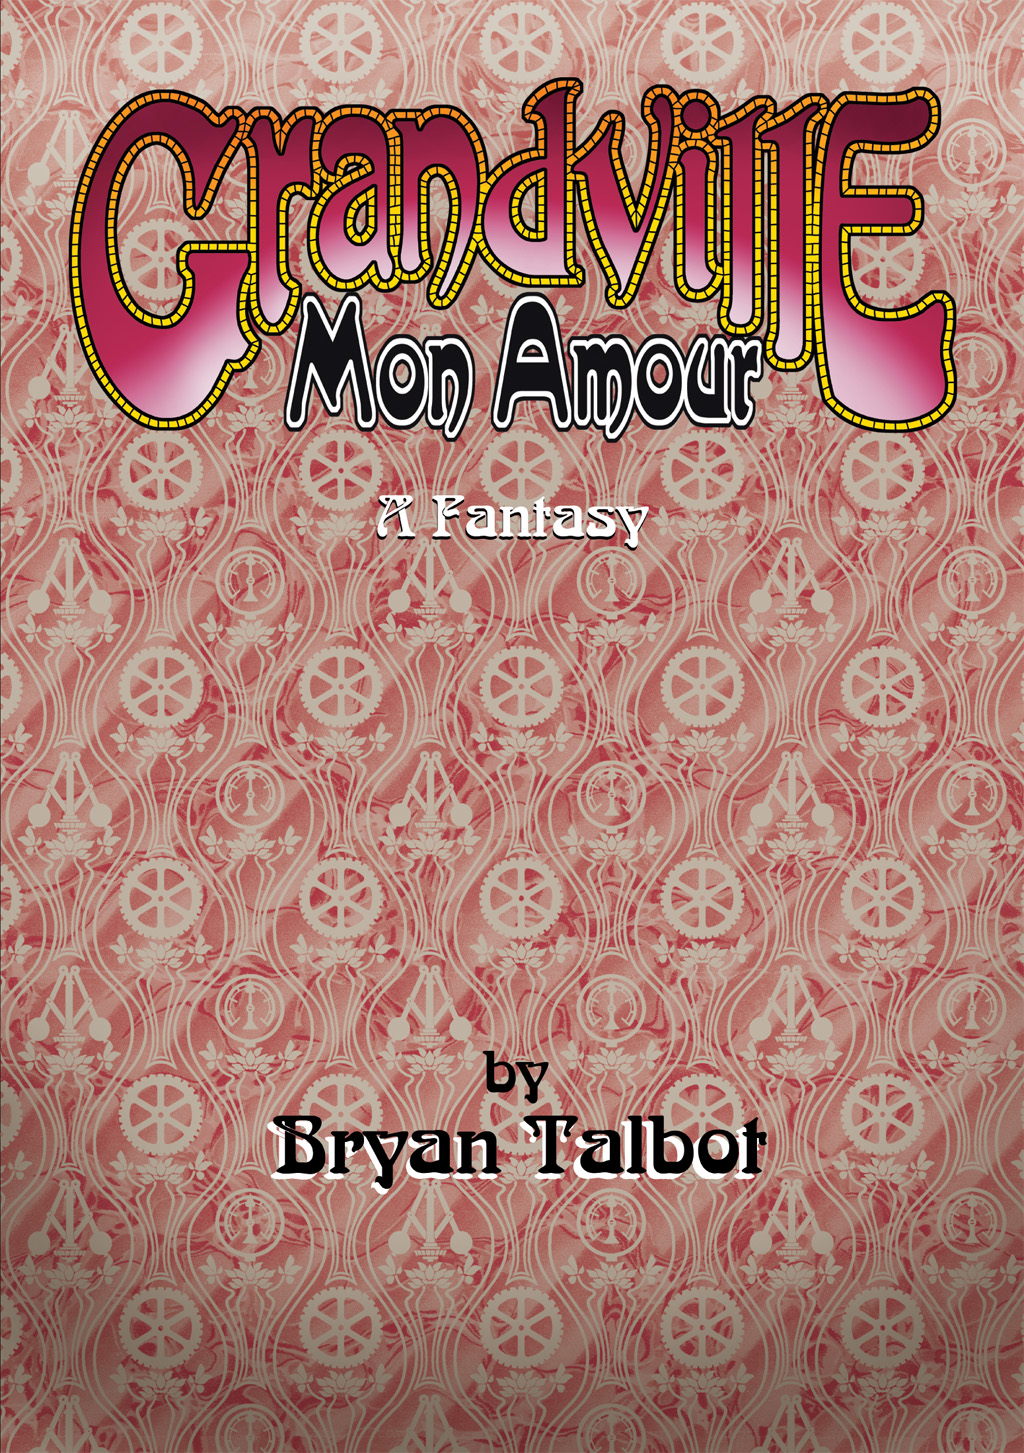 Read online Grandville comic -  Issue # Vol. 2 Mon Amour - 10